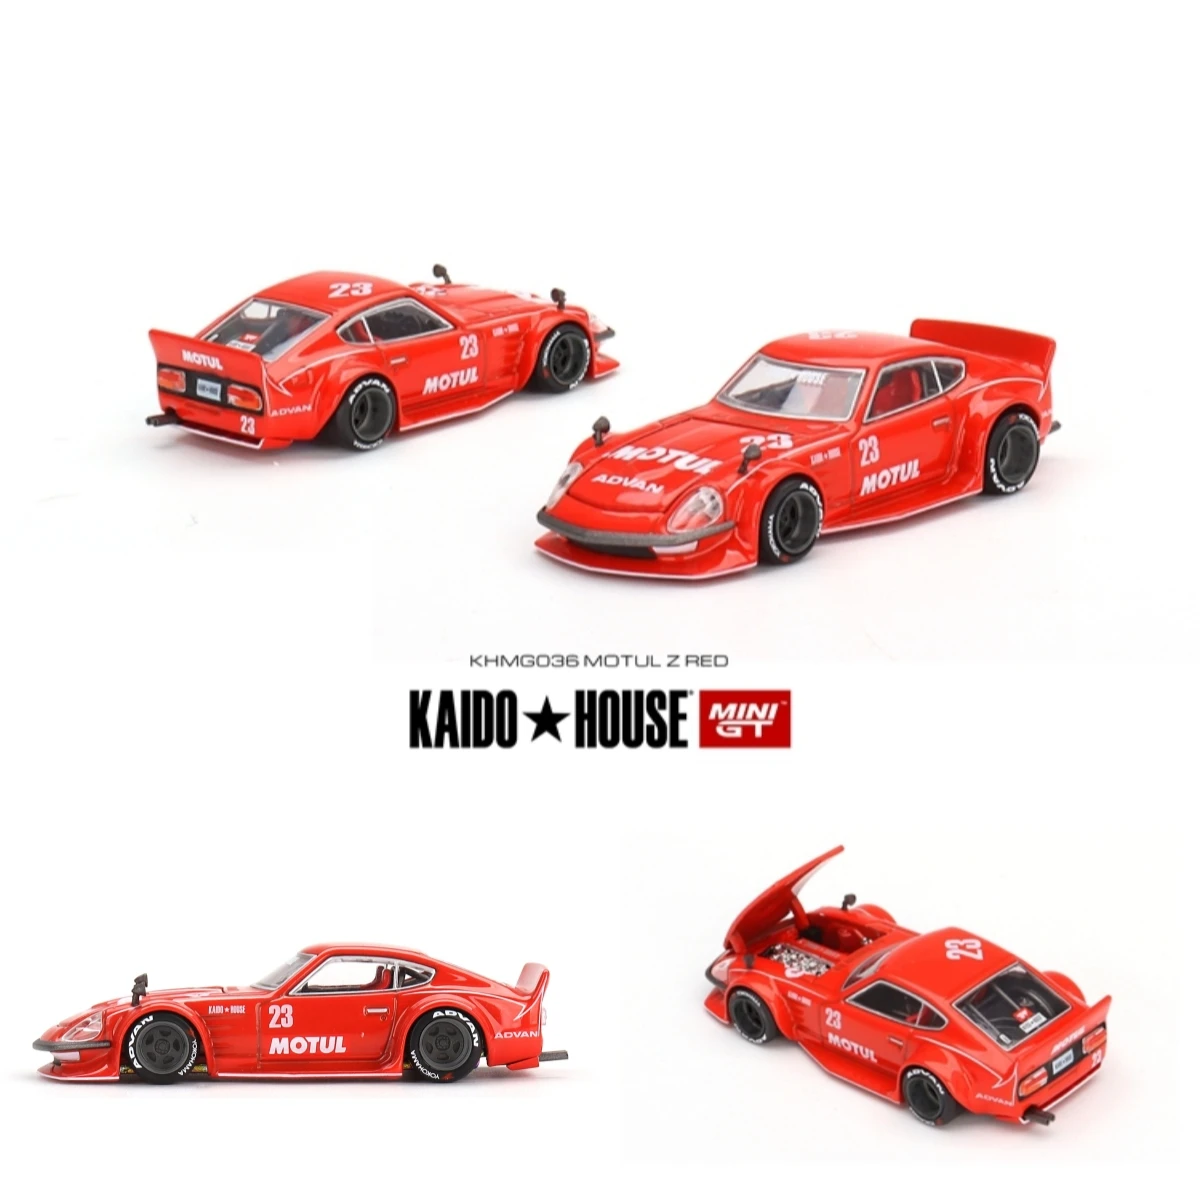 

Kaido House+MINIGT Datsun Fairlady Z MOTUL V2 Diecast Model Car